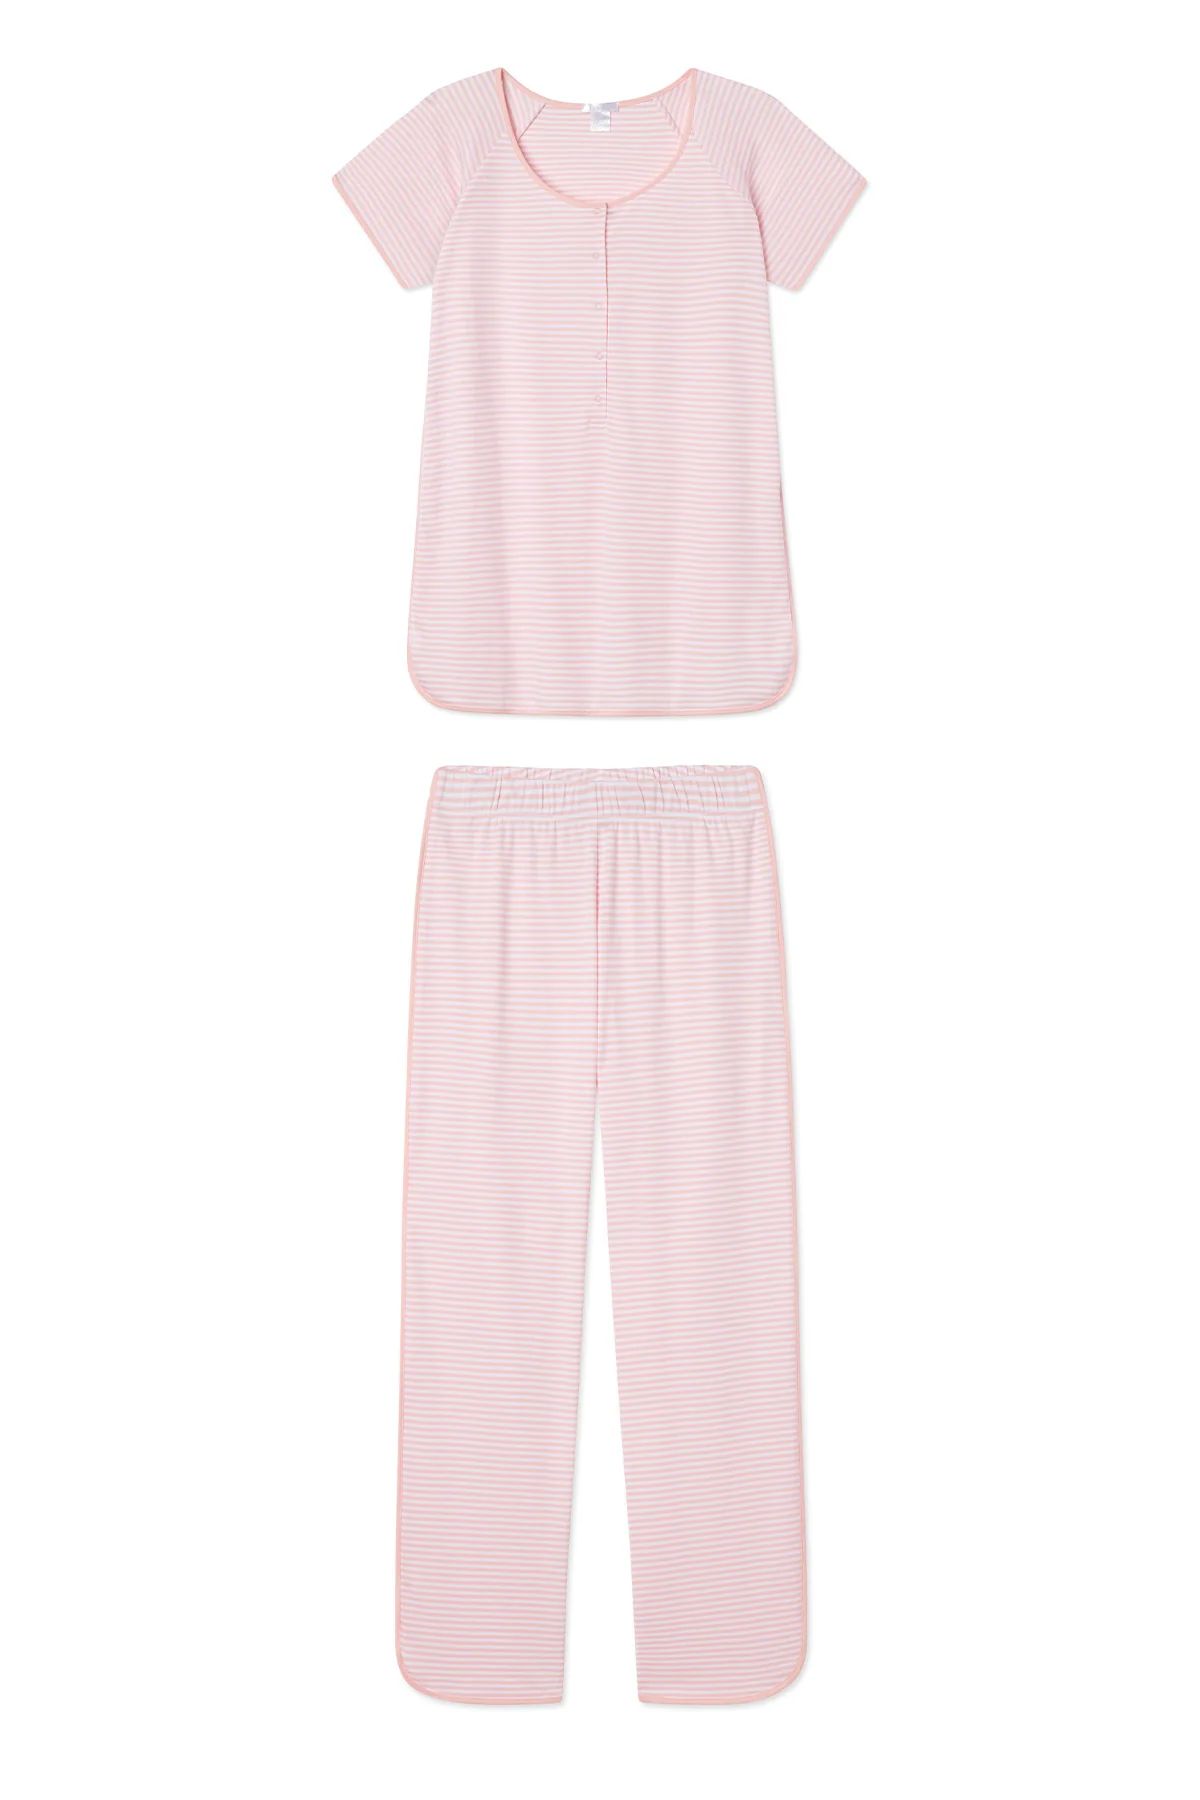 Pima Maternity Short-Long Set in English Rose Stripe | Lake Pajamas